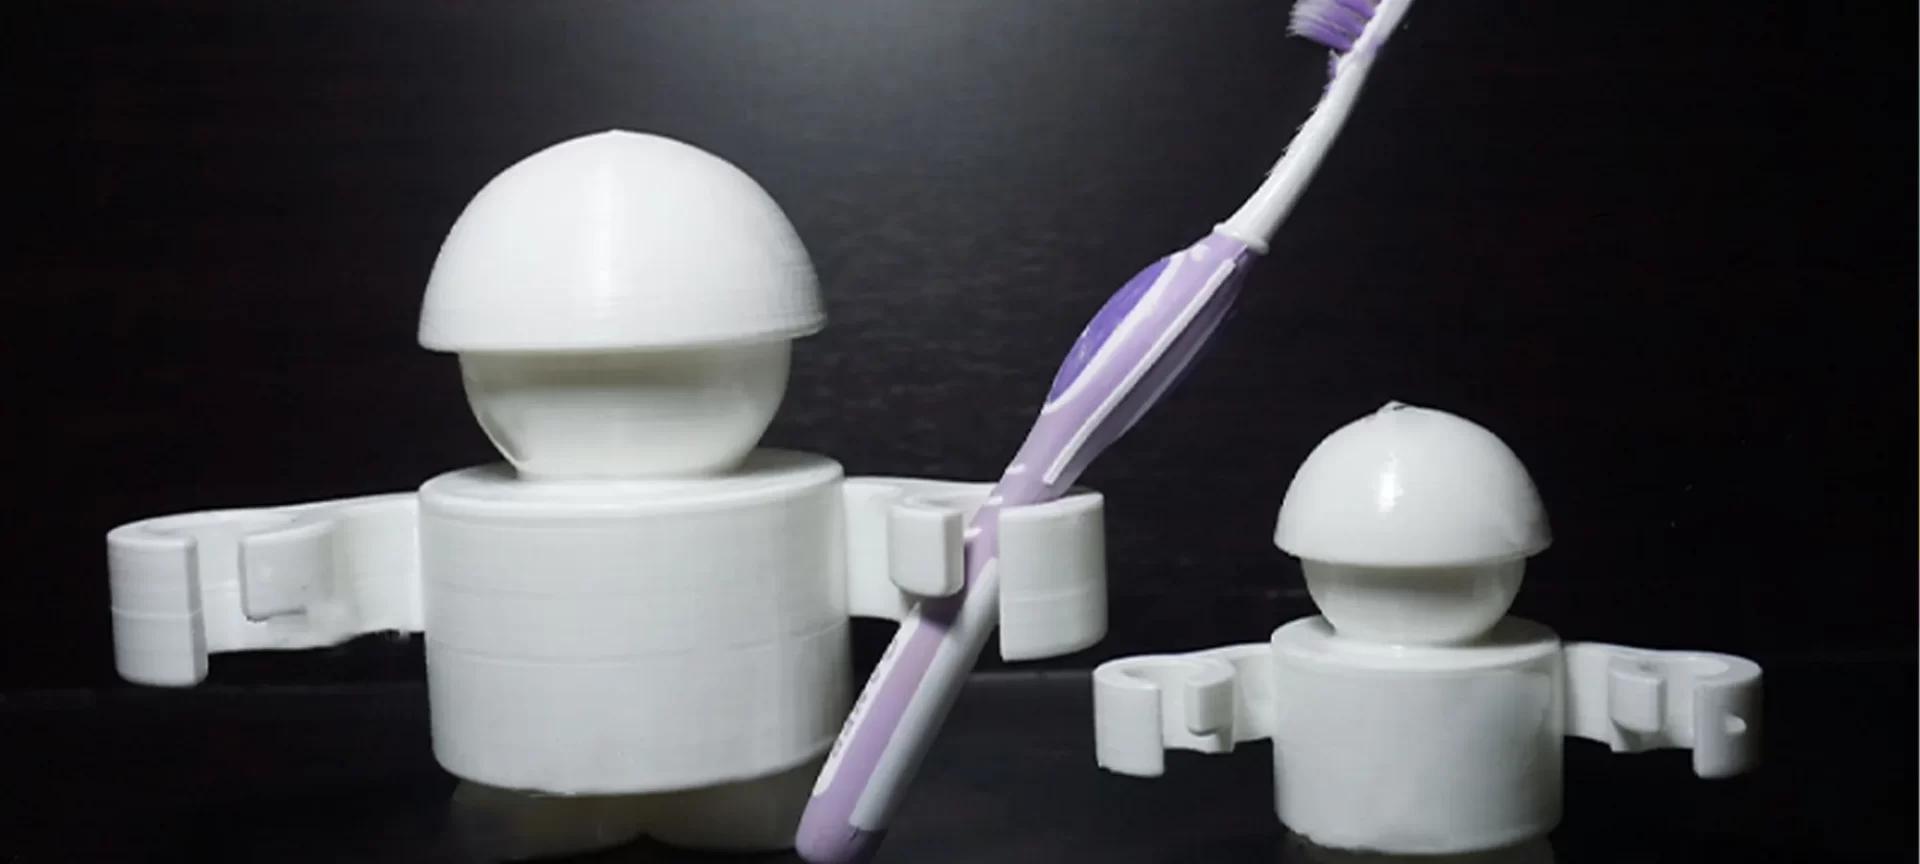 3D printed home gadget